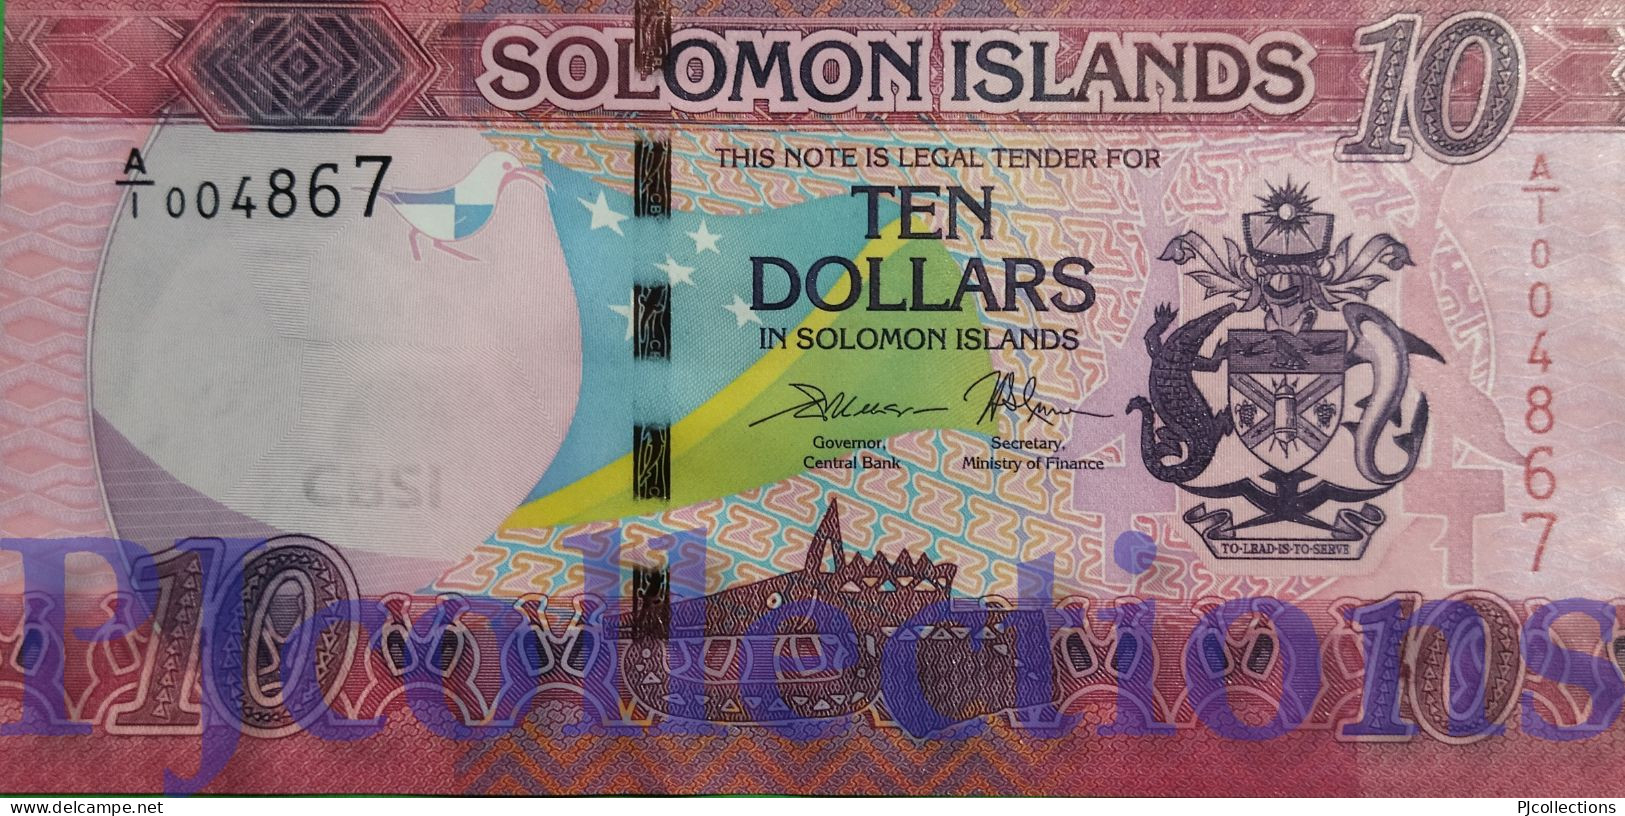 SOLOMON ISLANDS 10 DOLLARS 2017 PICK 33 UNC LOW SERIAL NUMBER "A/1 0048**" - Solomon Islands